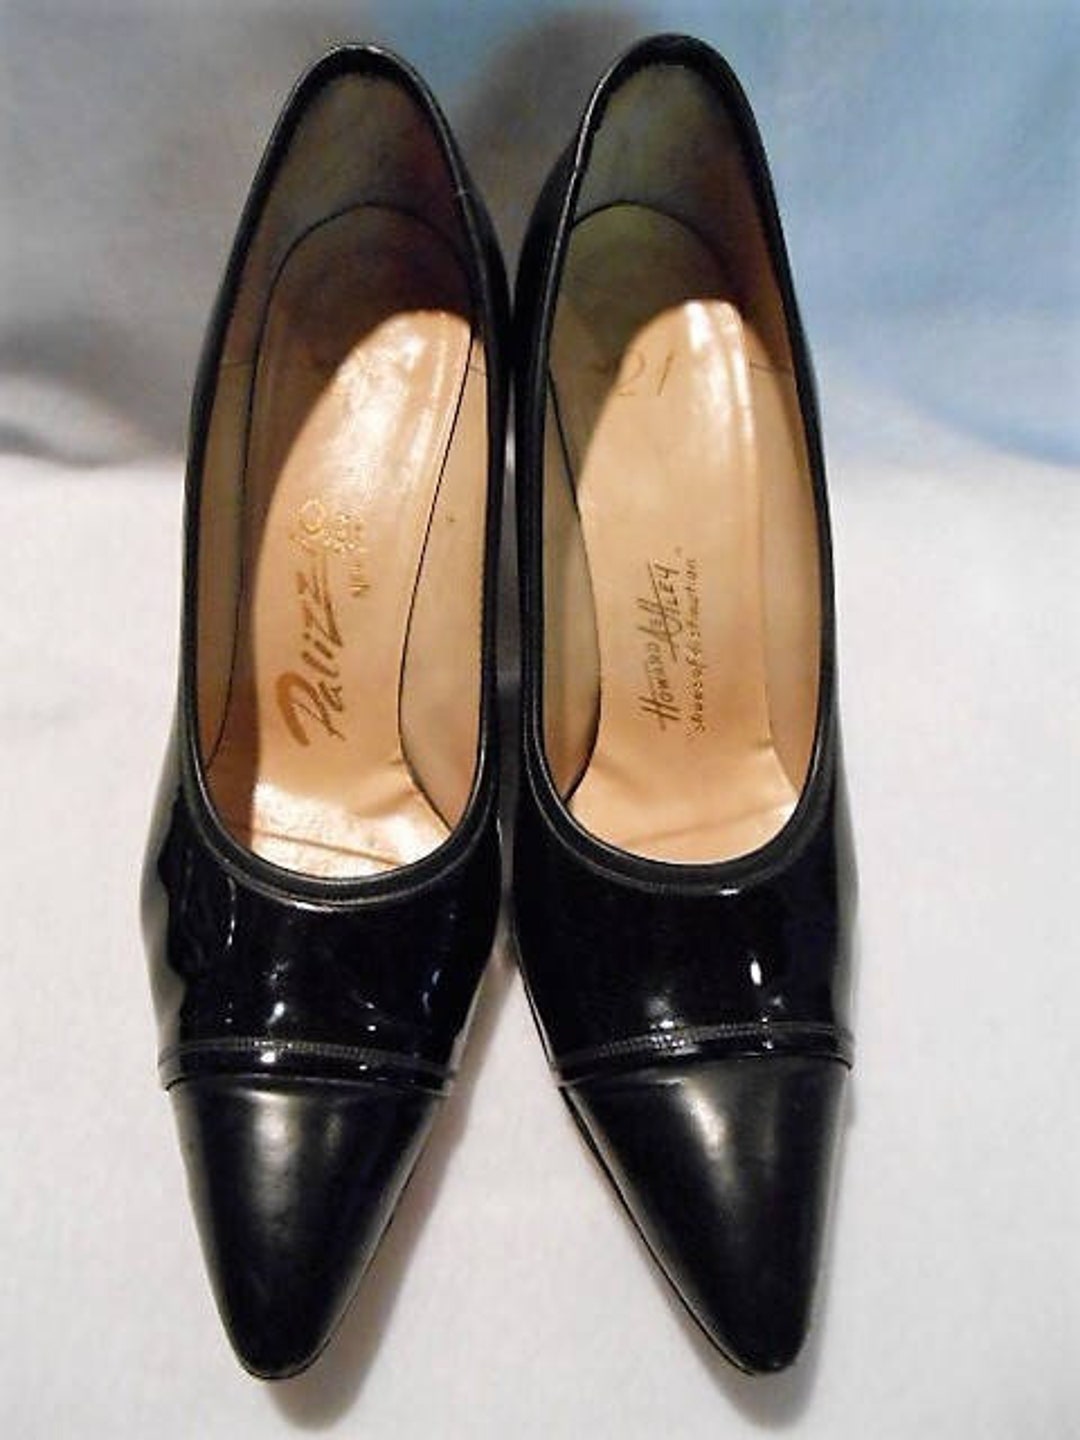 Vintage Black Patent Leather Stiletto Heeled Shoes Pumps - Etsy